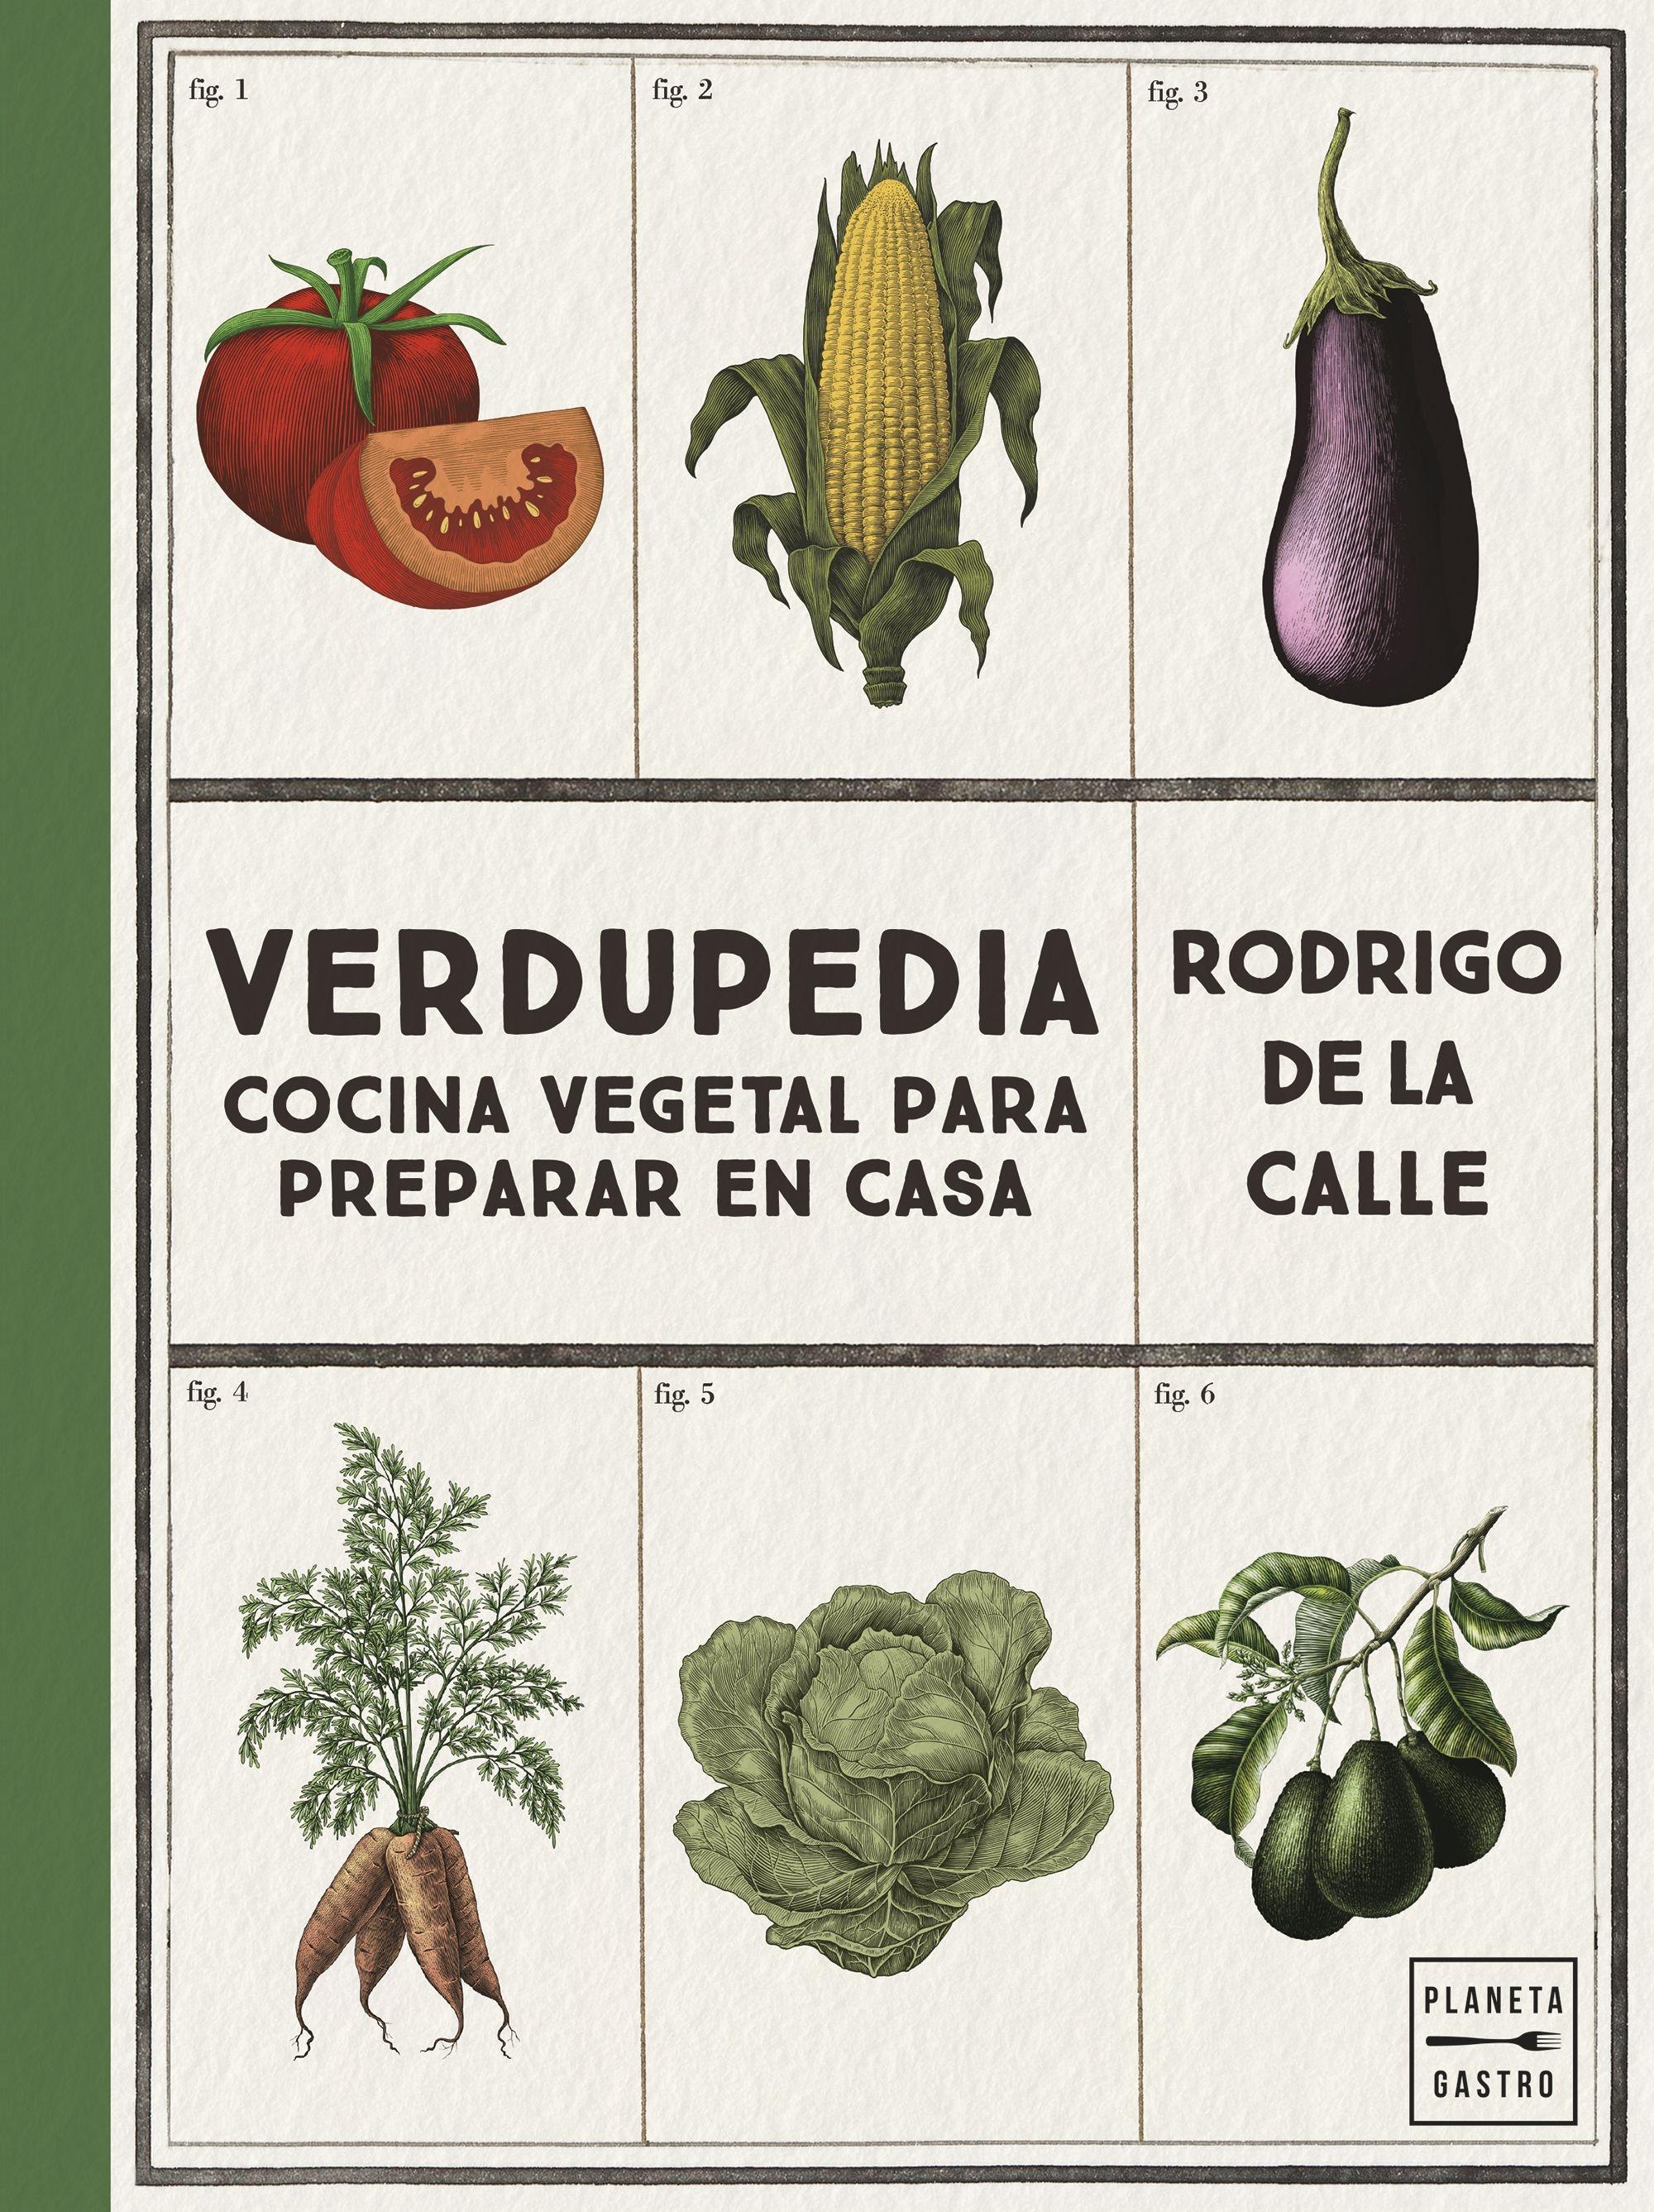 Verdupedia "Cocina Vegetal para Preparar en Casa"